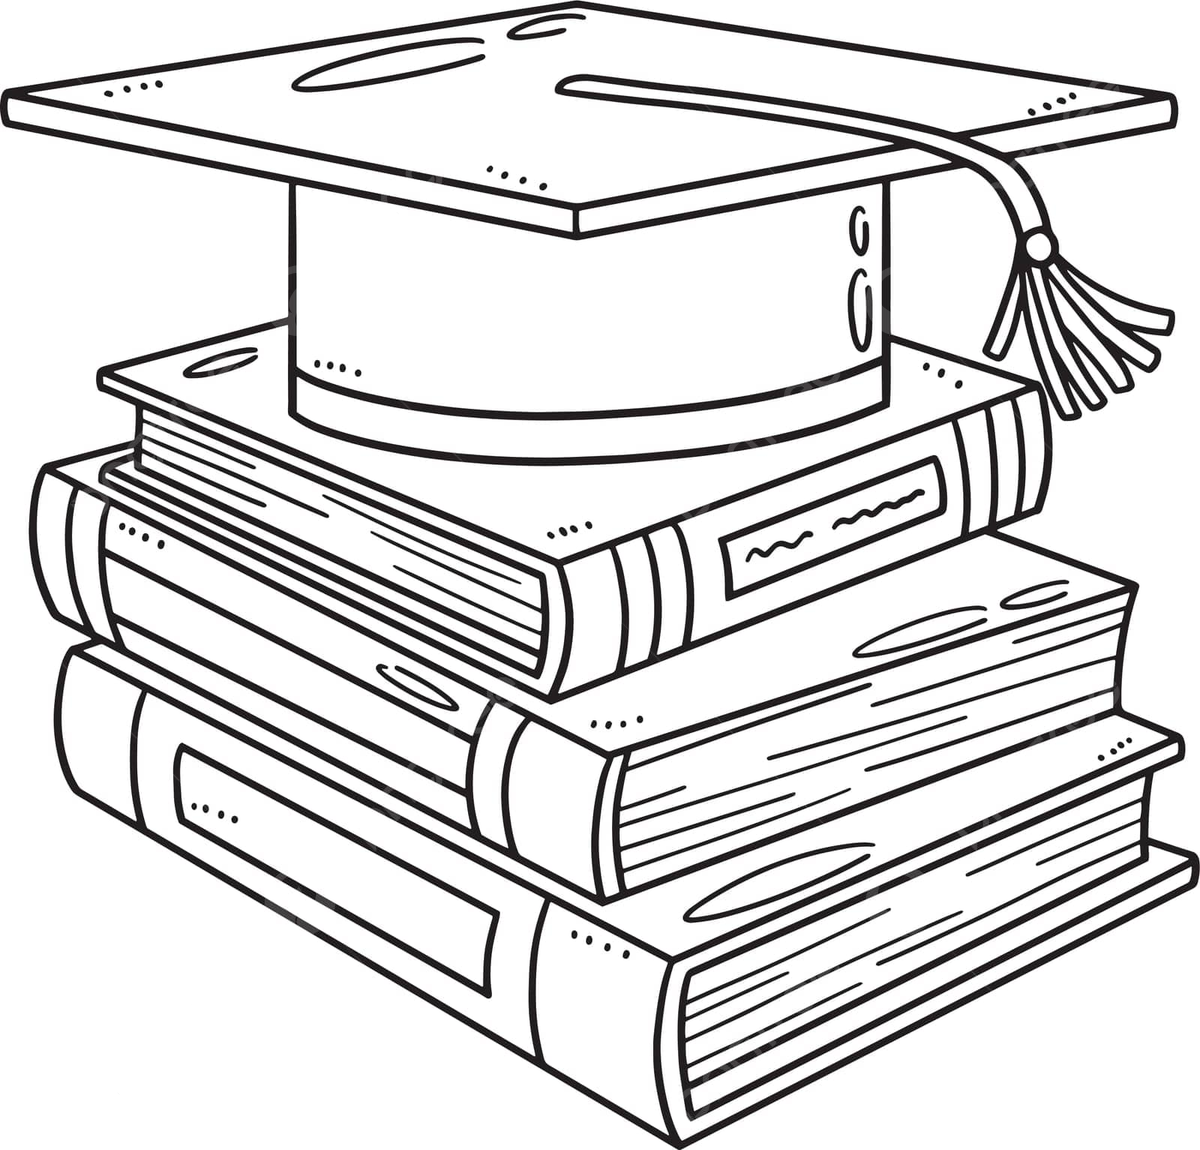 Dibujo de gorro graduaciãn con libros aislado pãgina para colorear grado alumno vector png dibujos dibujo de libro dibujo de birrete de graduaciãn dibujo de graduacion png y vector para dcargar gratis